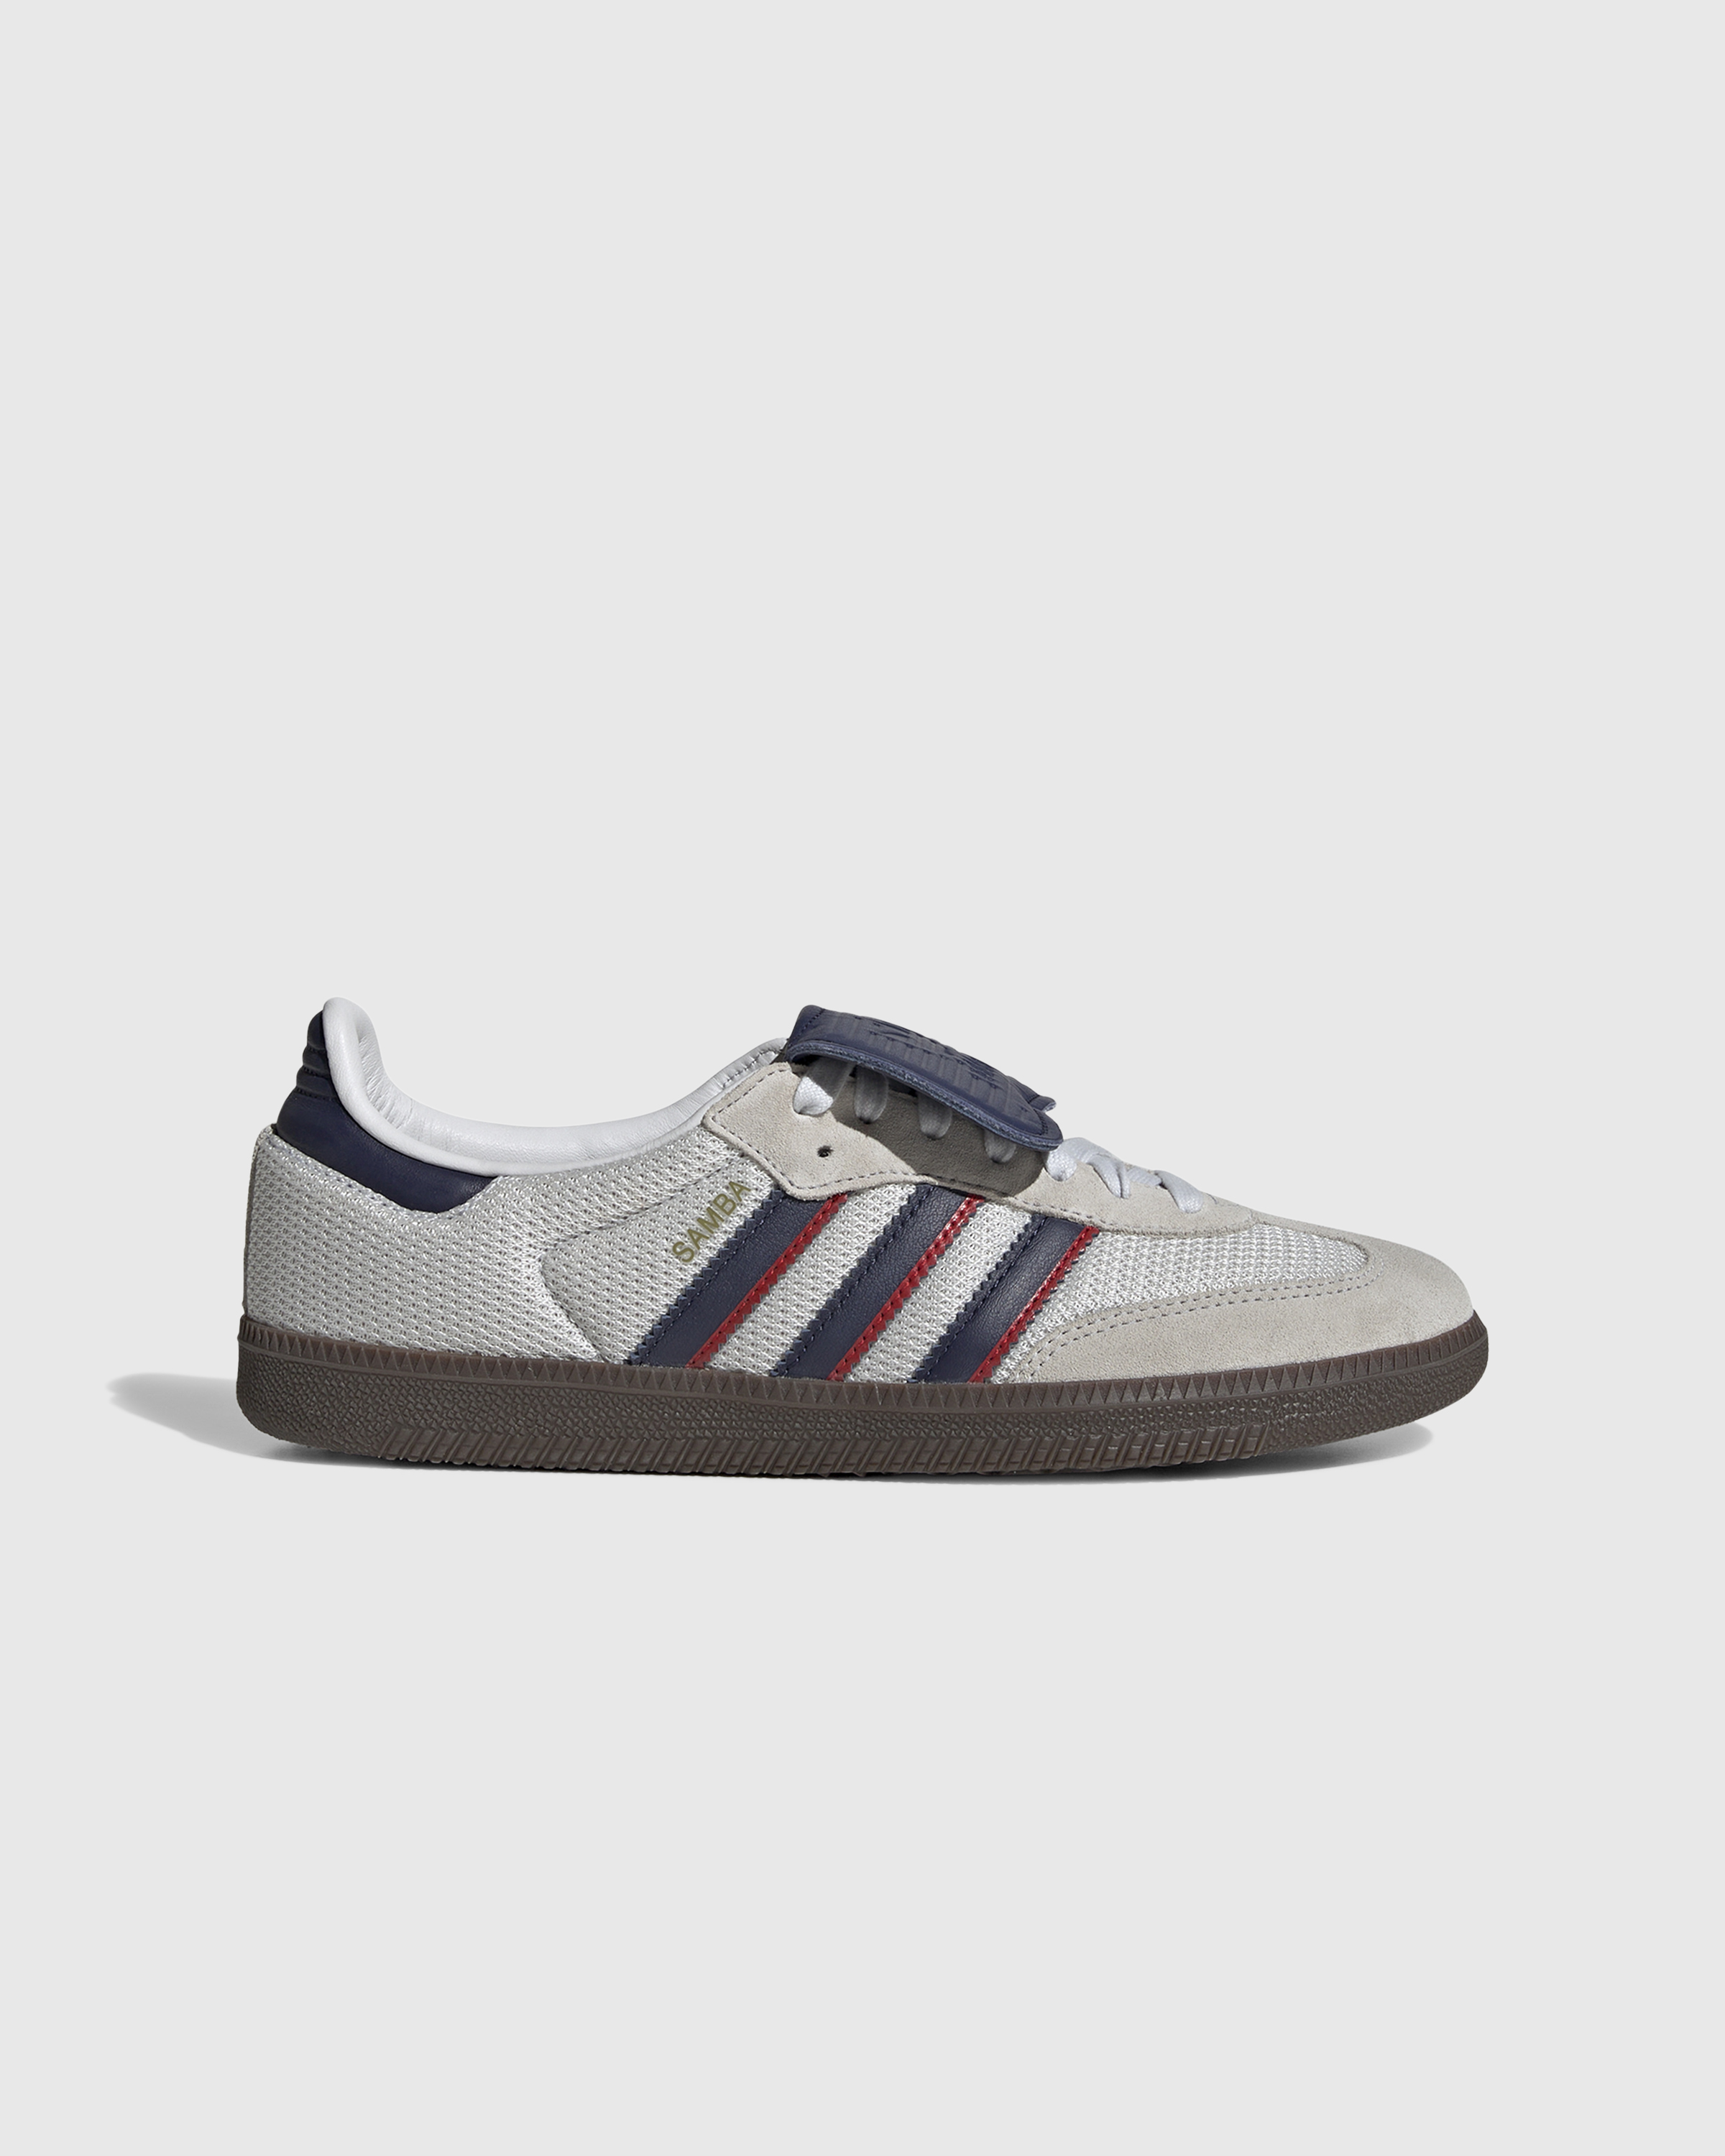 Adidas – Samba LT White/Blue/Gum - Low Top Sneakers - White - Image 1